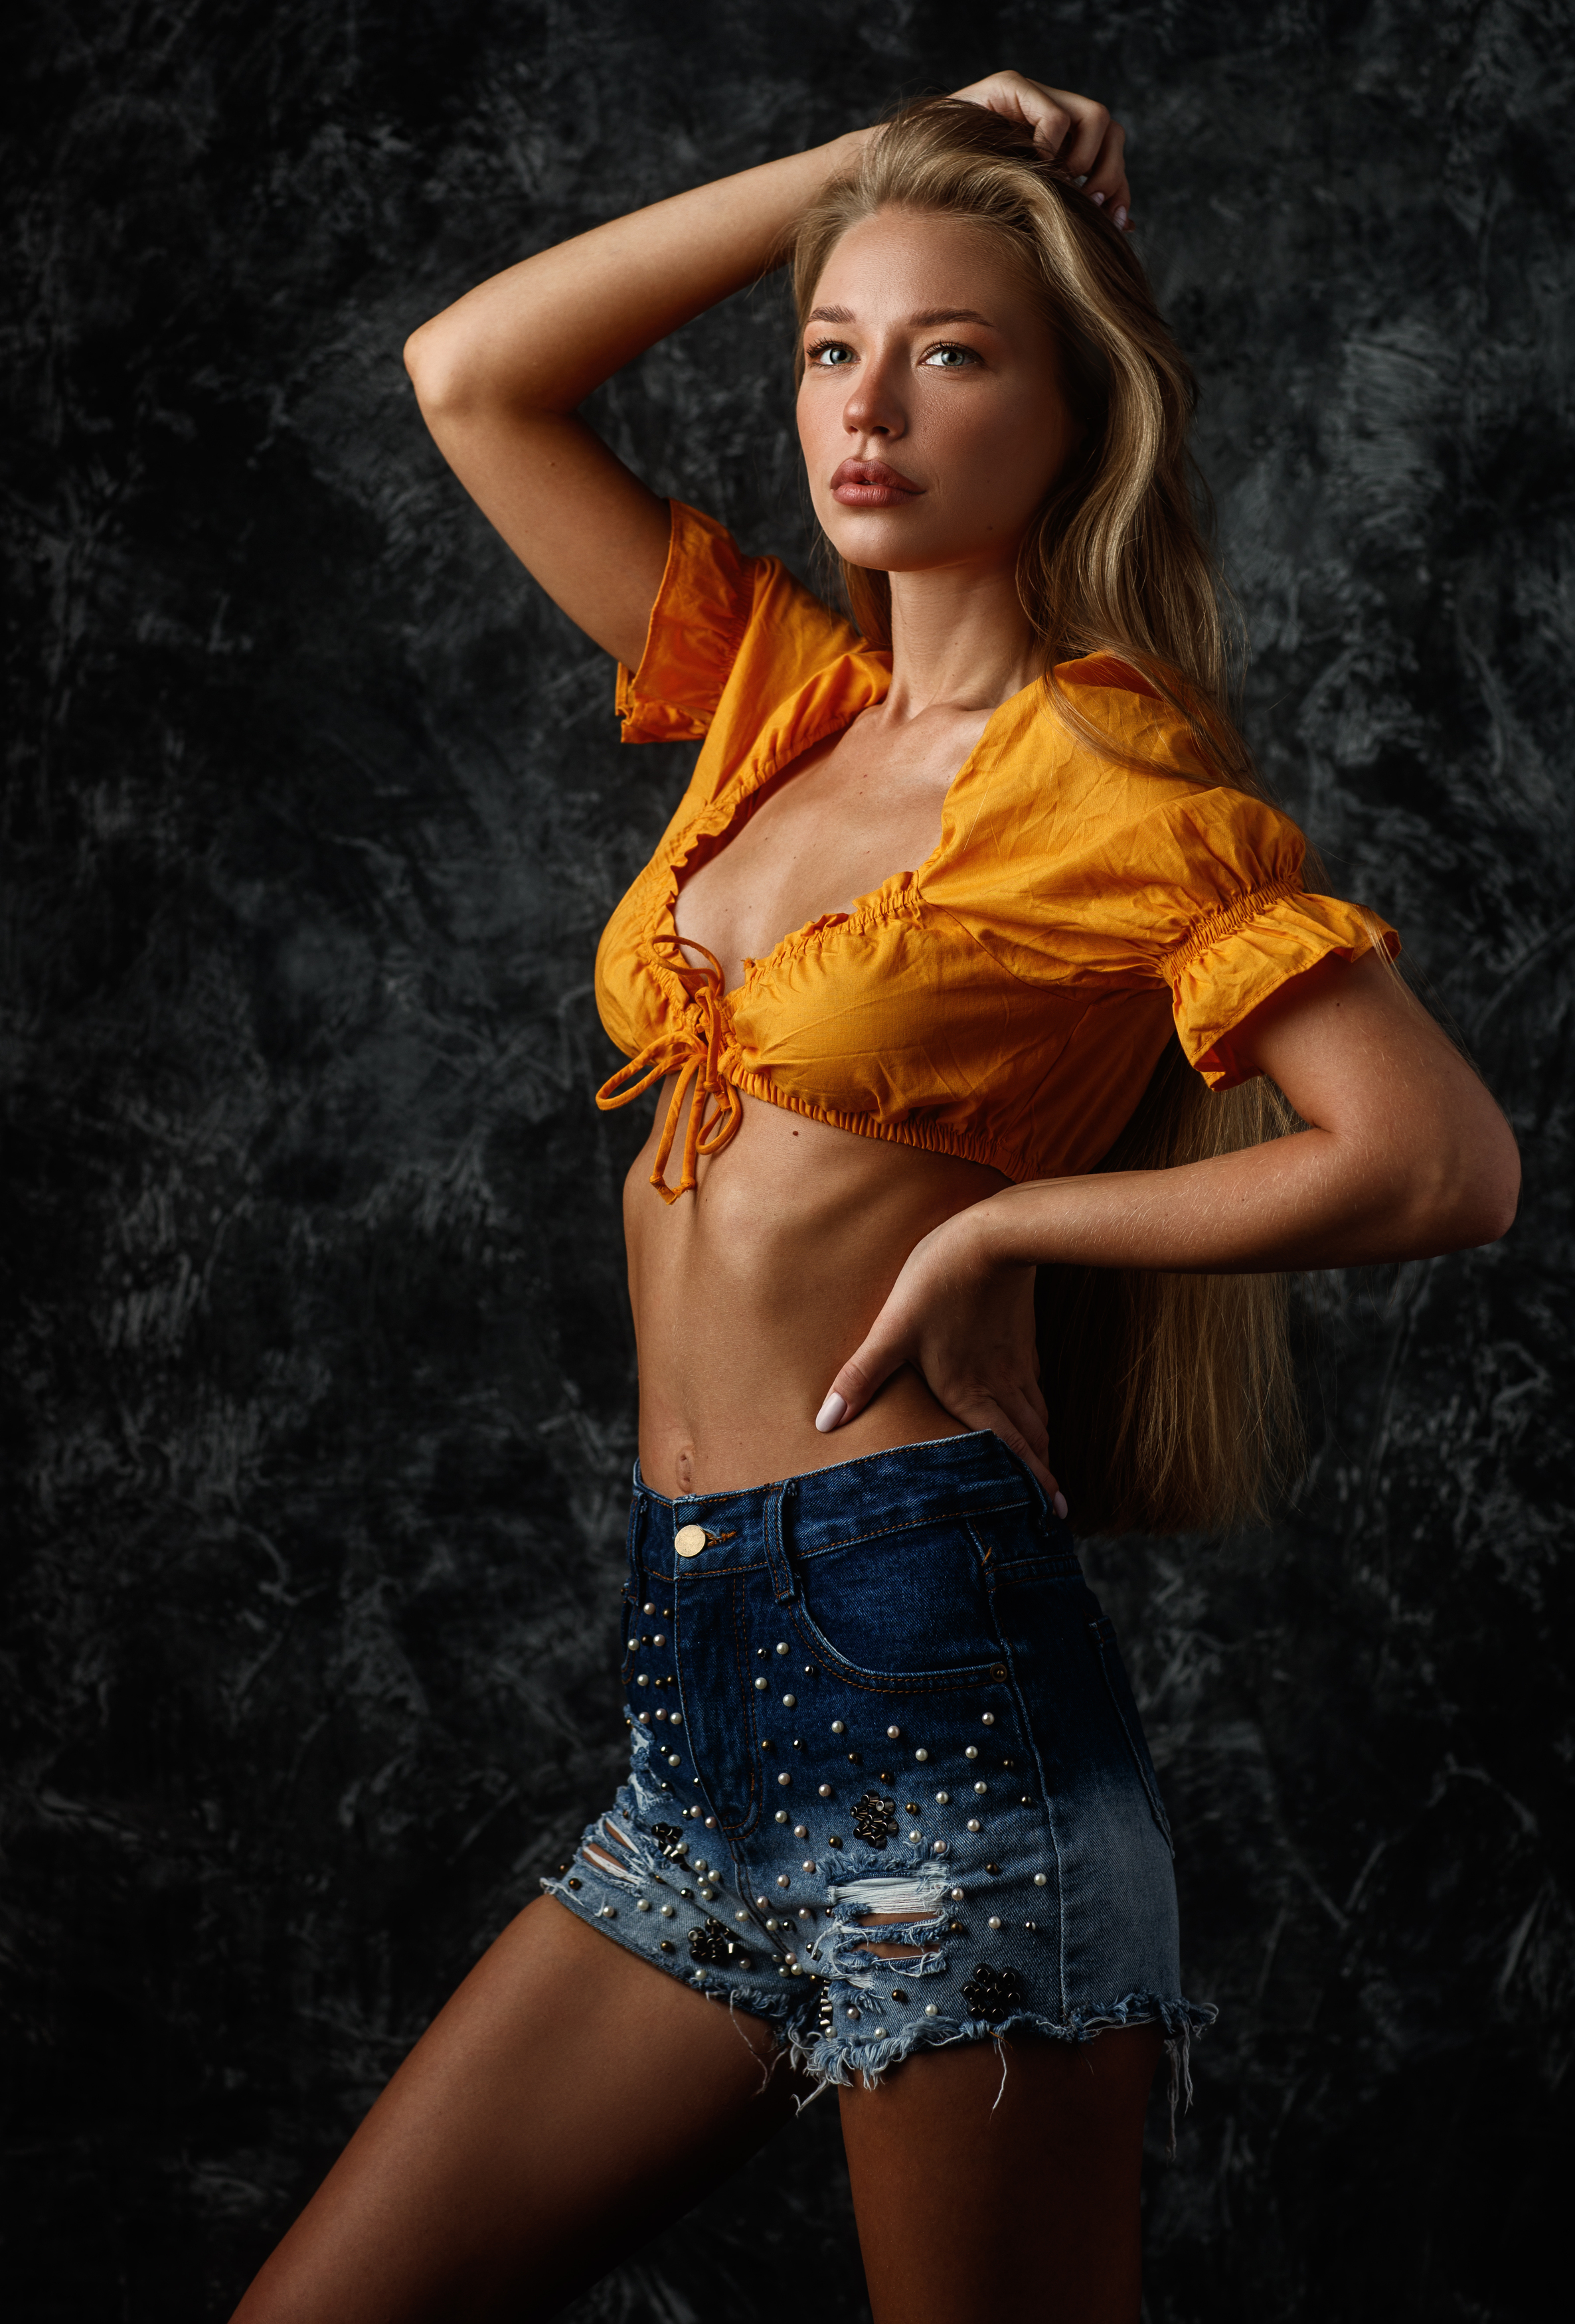 Sergey Sorokin Women Blonde Long Hair Knot Shorts Denim Simple Background Orange Tops 2372x3500